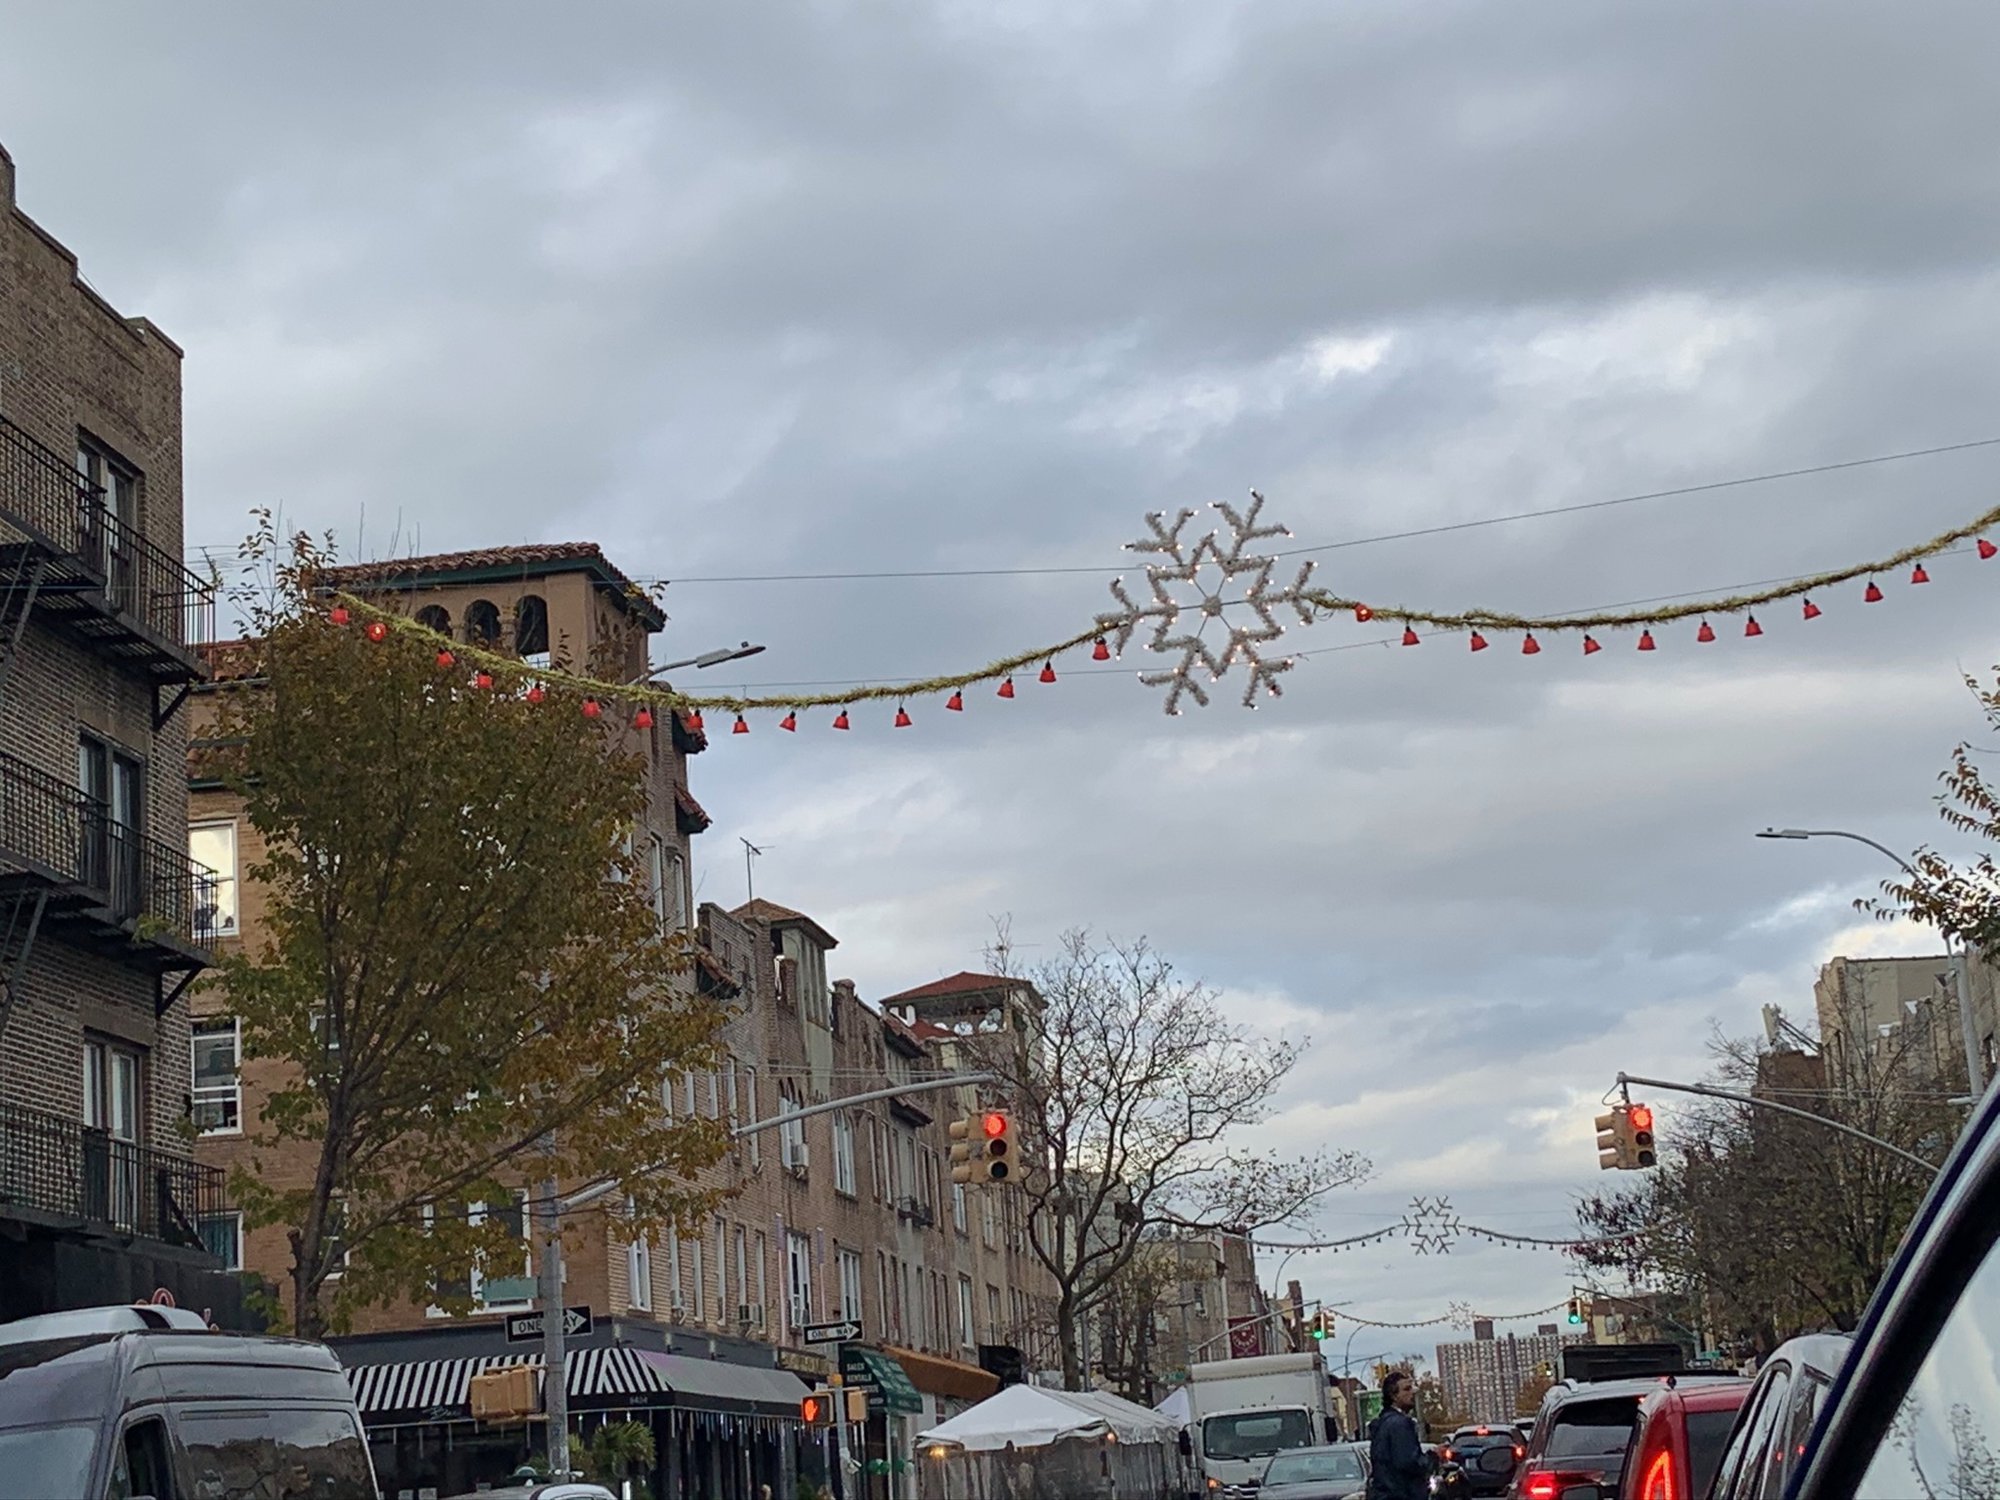 Holiday lights return to Third Avenue